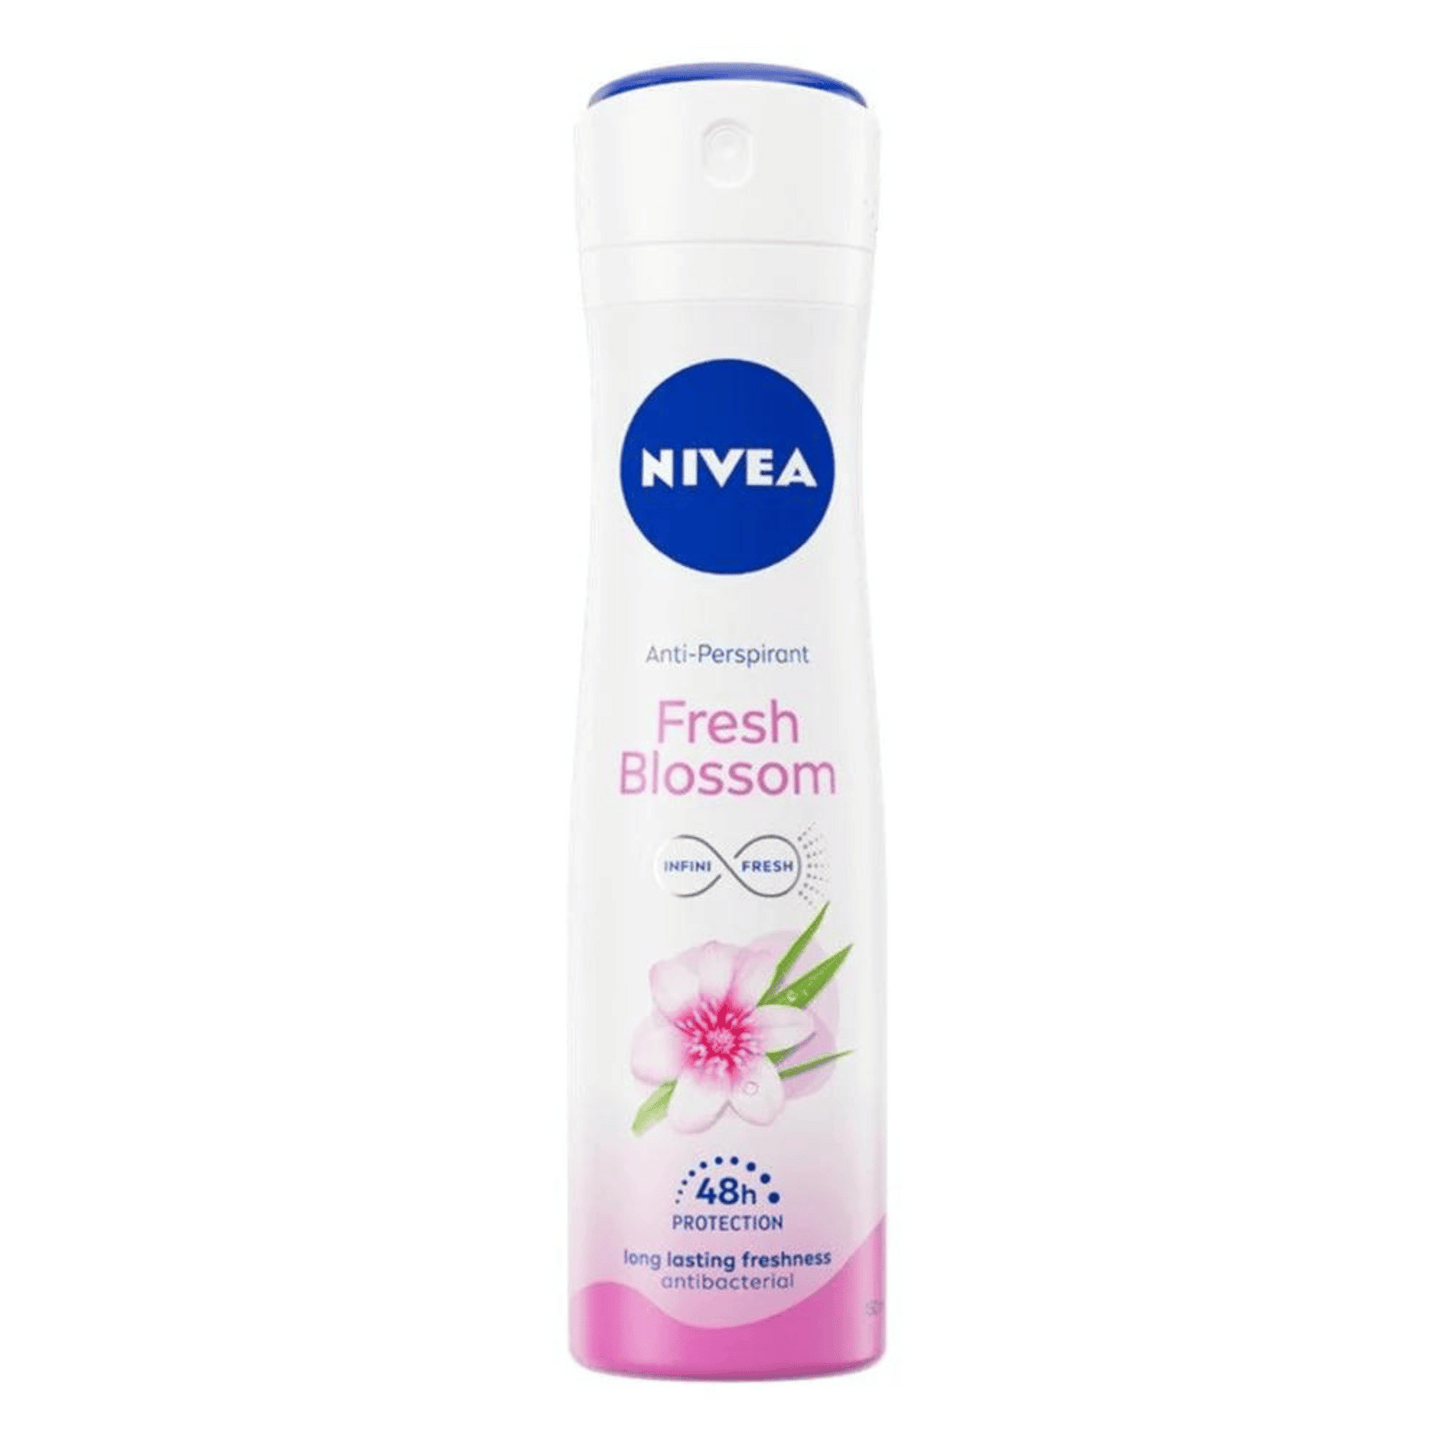 Primary Image of Women's Spray Fresh Blossom Anti-Perspirant Deodorant